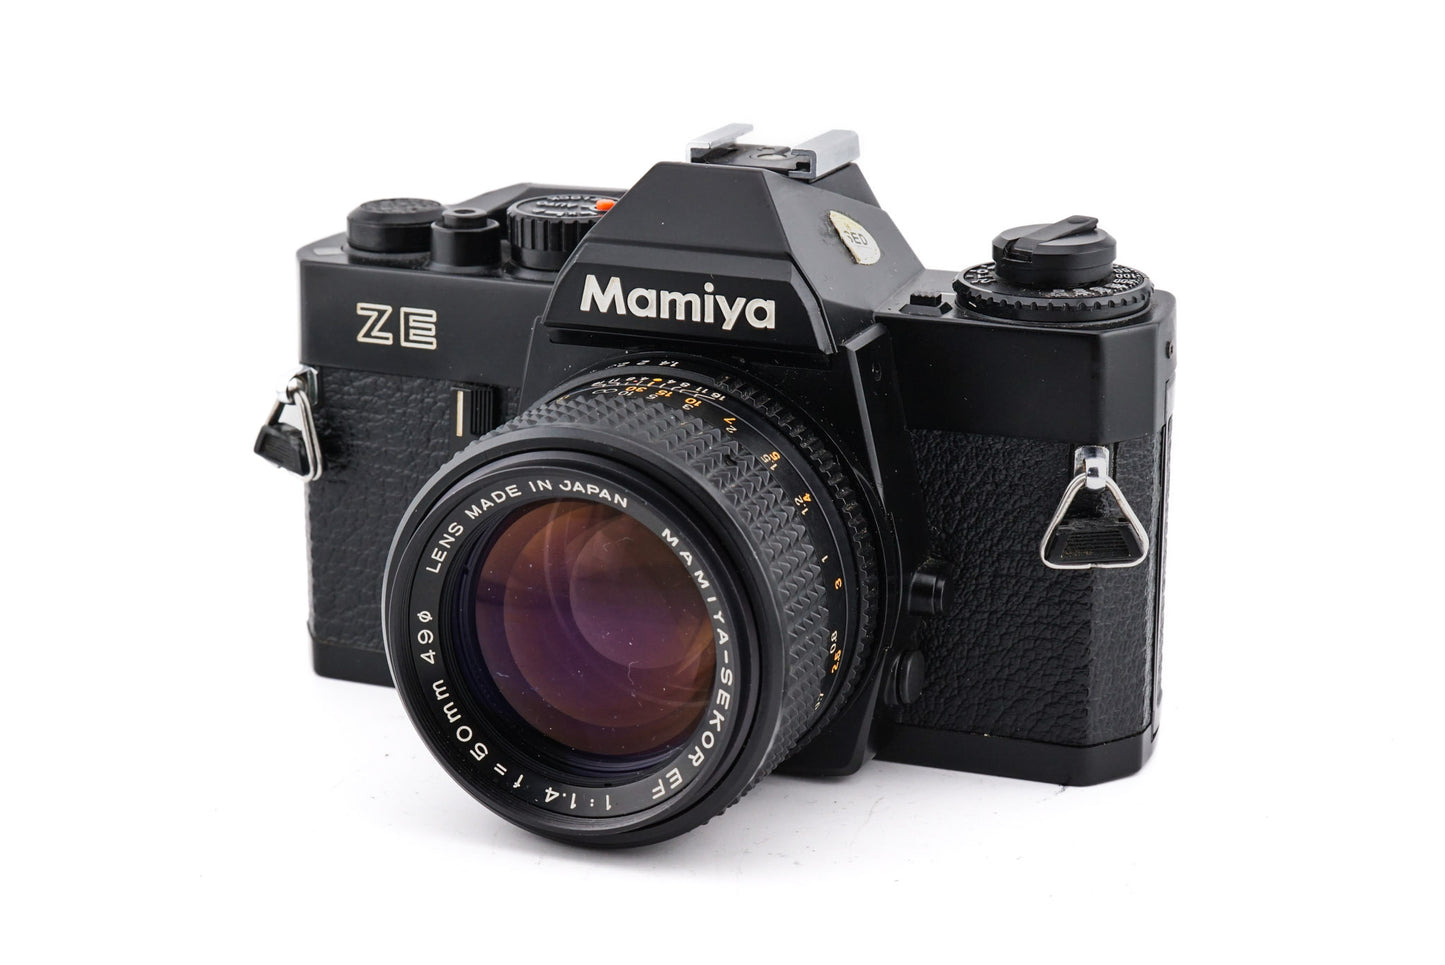 Mamiya ZE - Camera